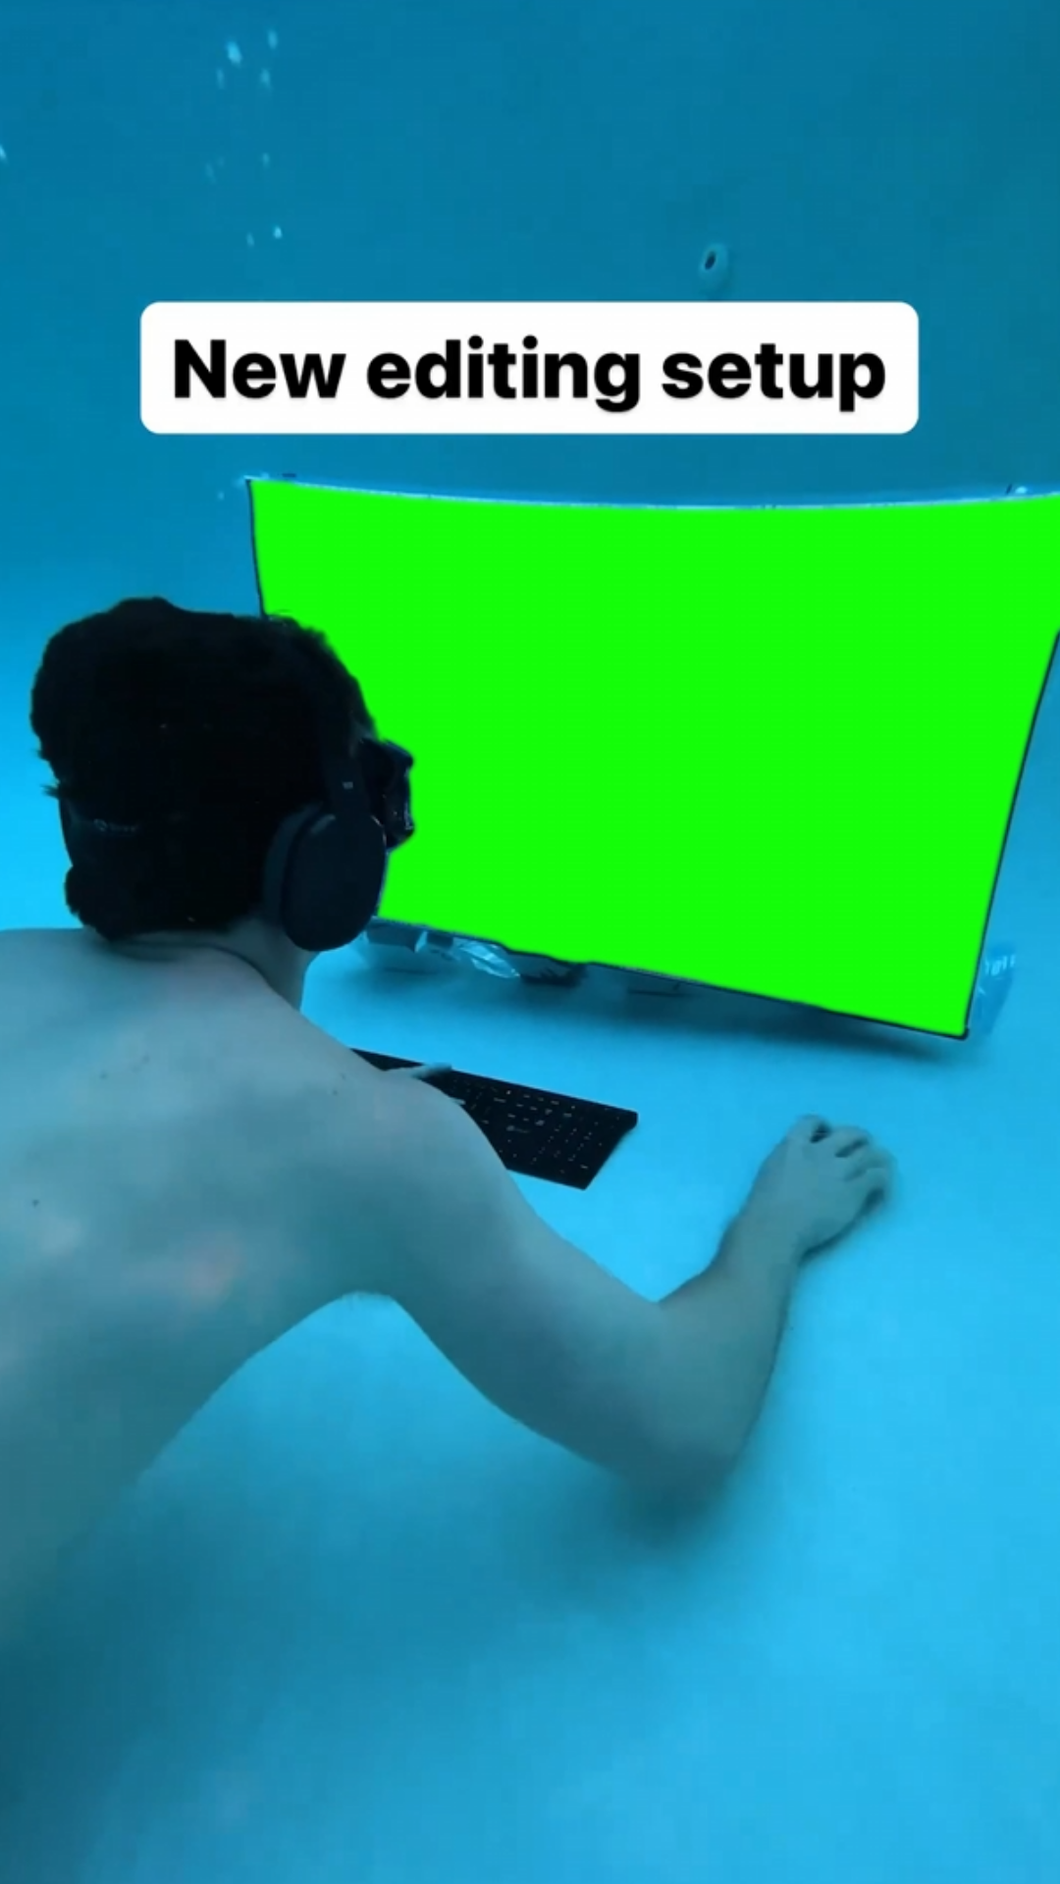 New Editing Setup Meme - Man Editing Underwater (Green Screen)